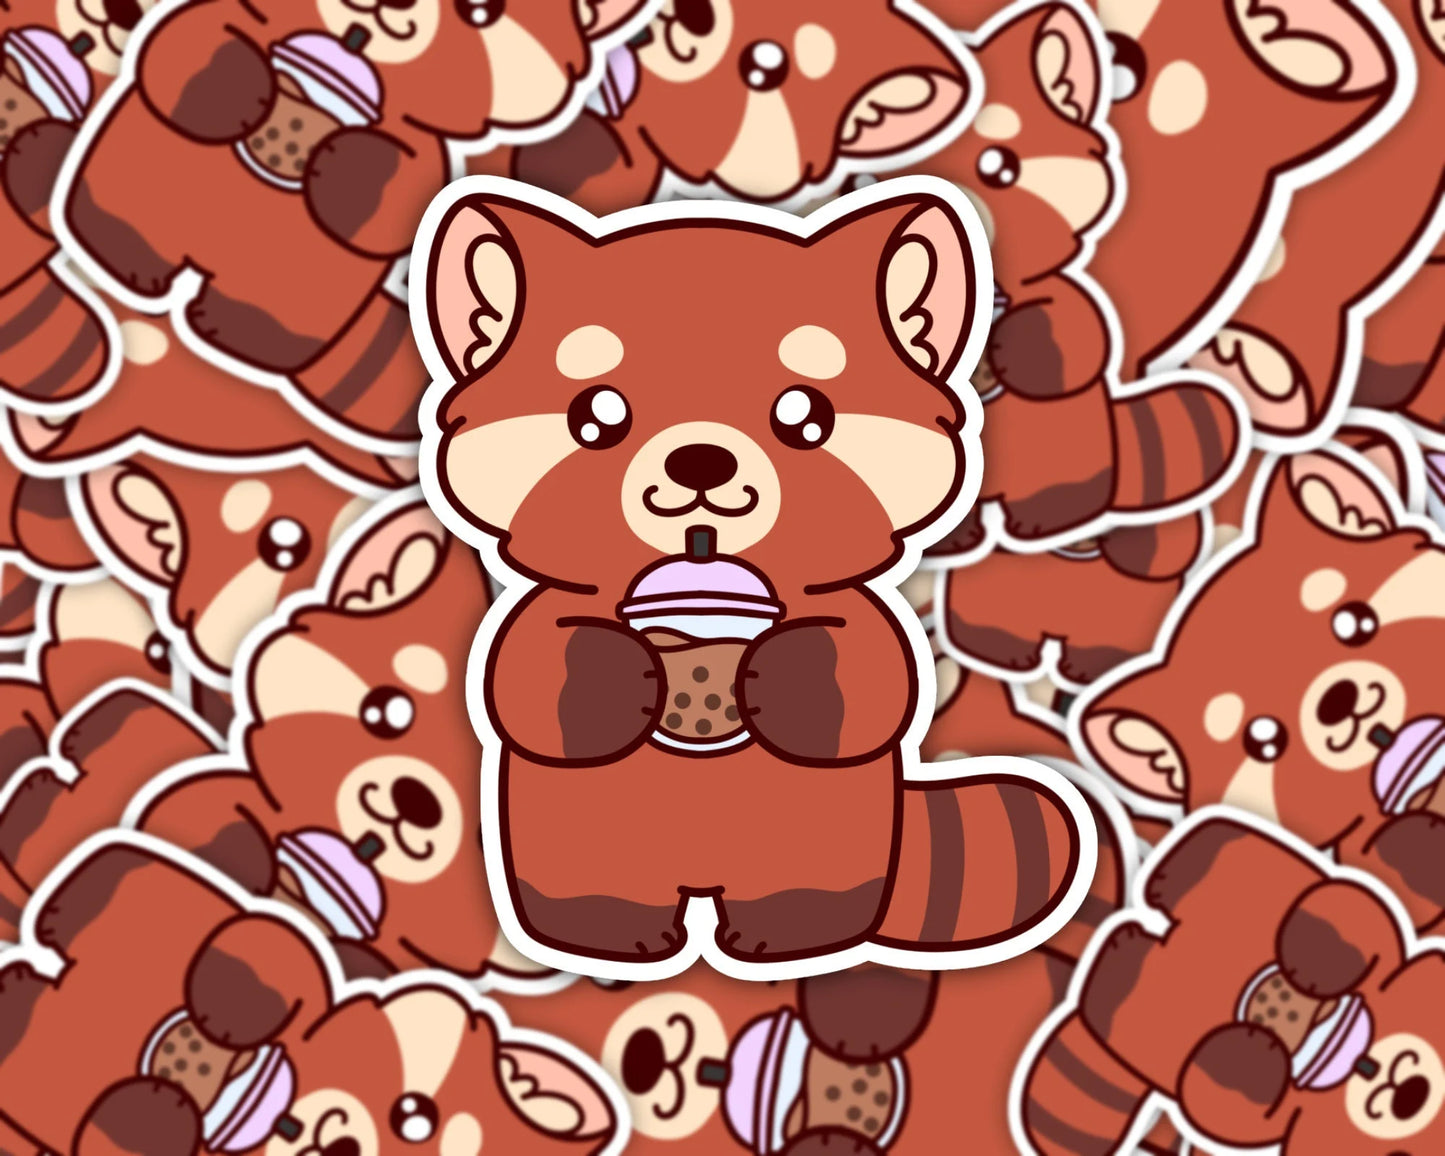 "Berry" the Red Panda Drinking Boba Waterproof Vinyl Sticker